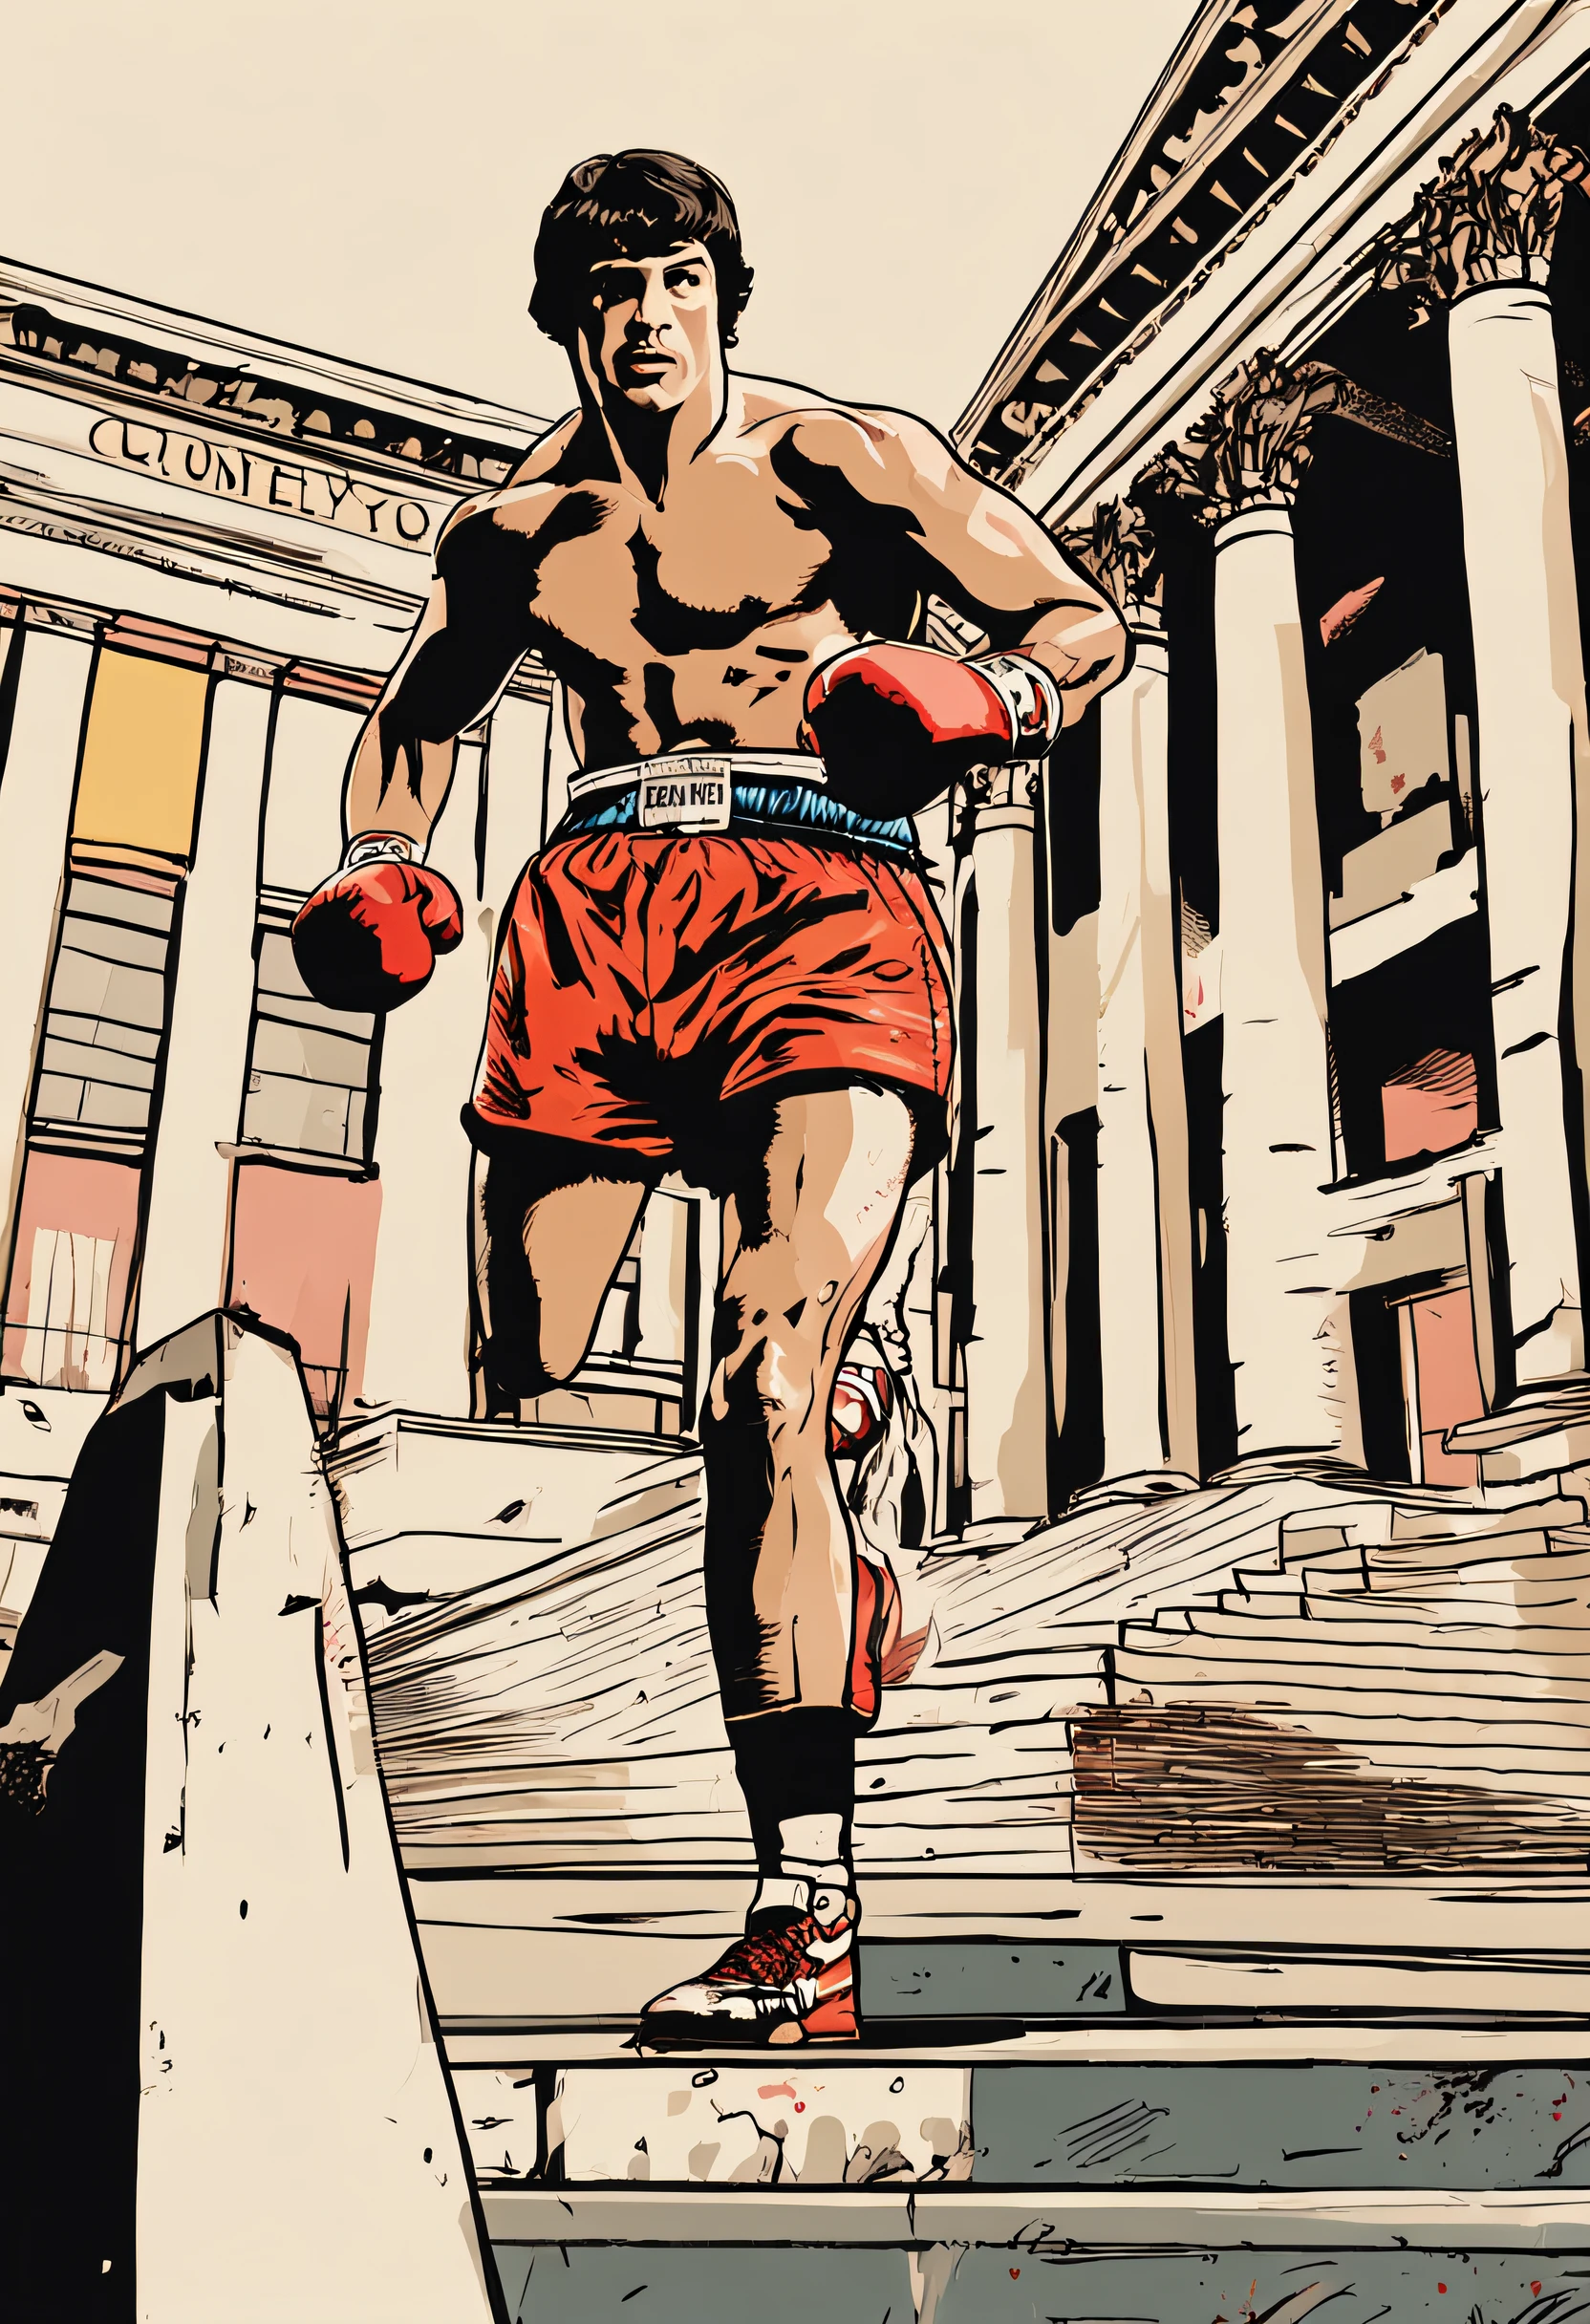 Rocky Balboa training hard, running down the steps of the Philadelphia Museum of Art, punching punching bags